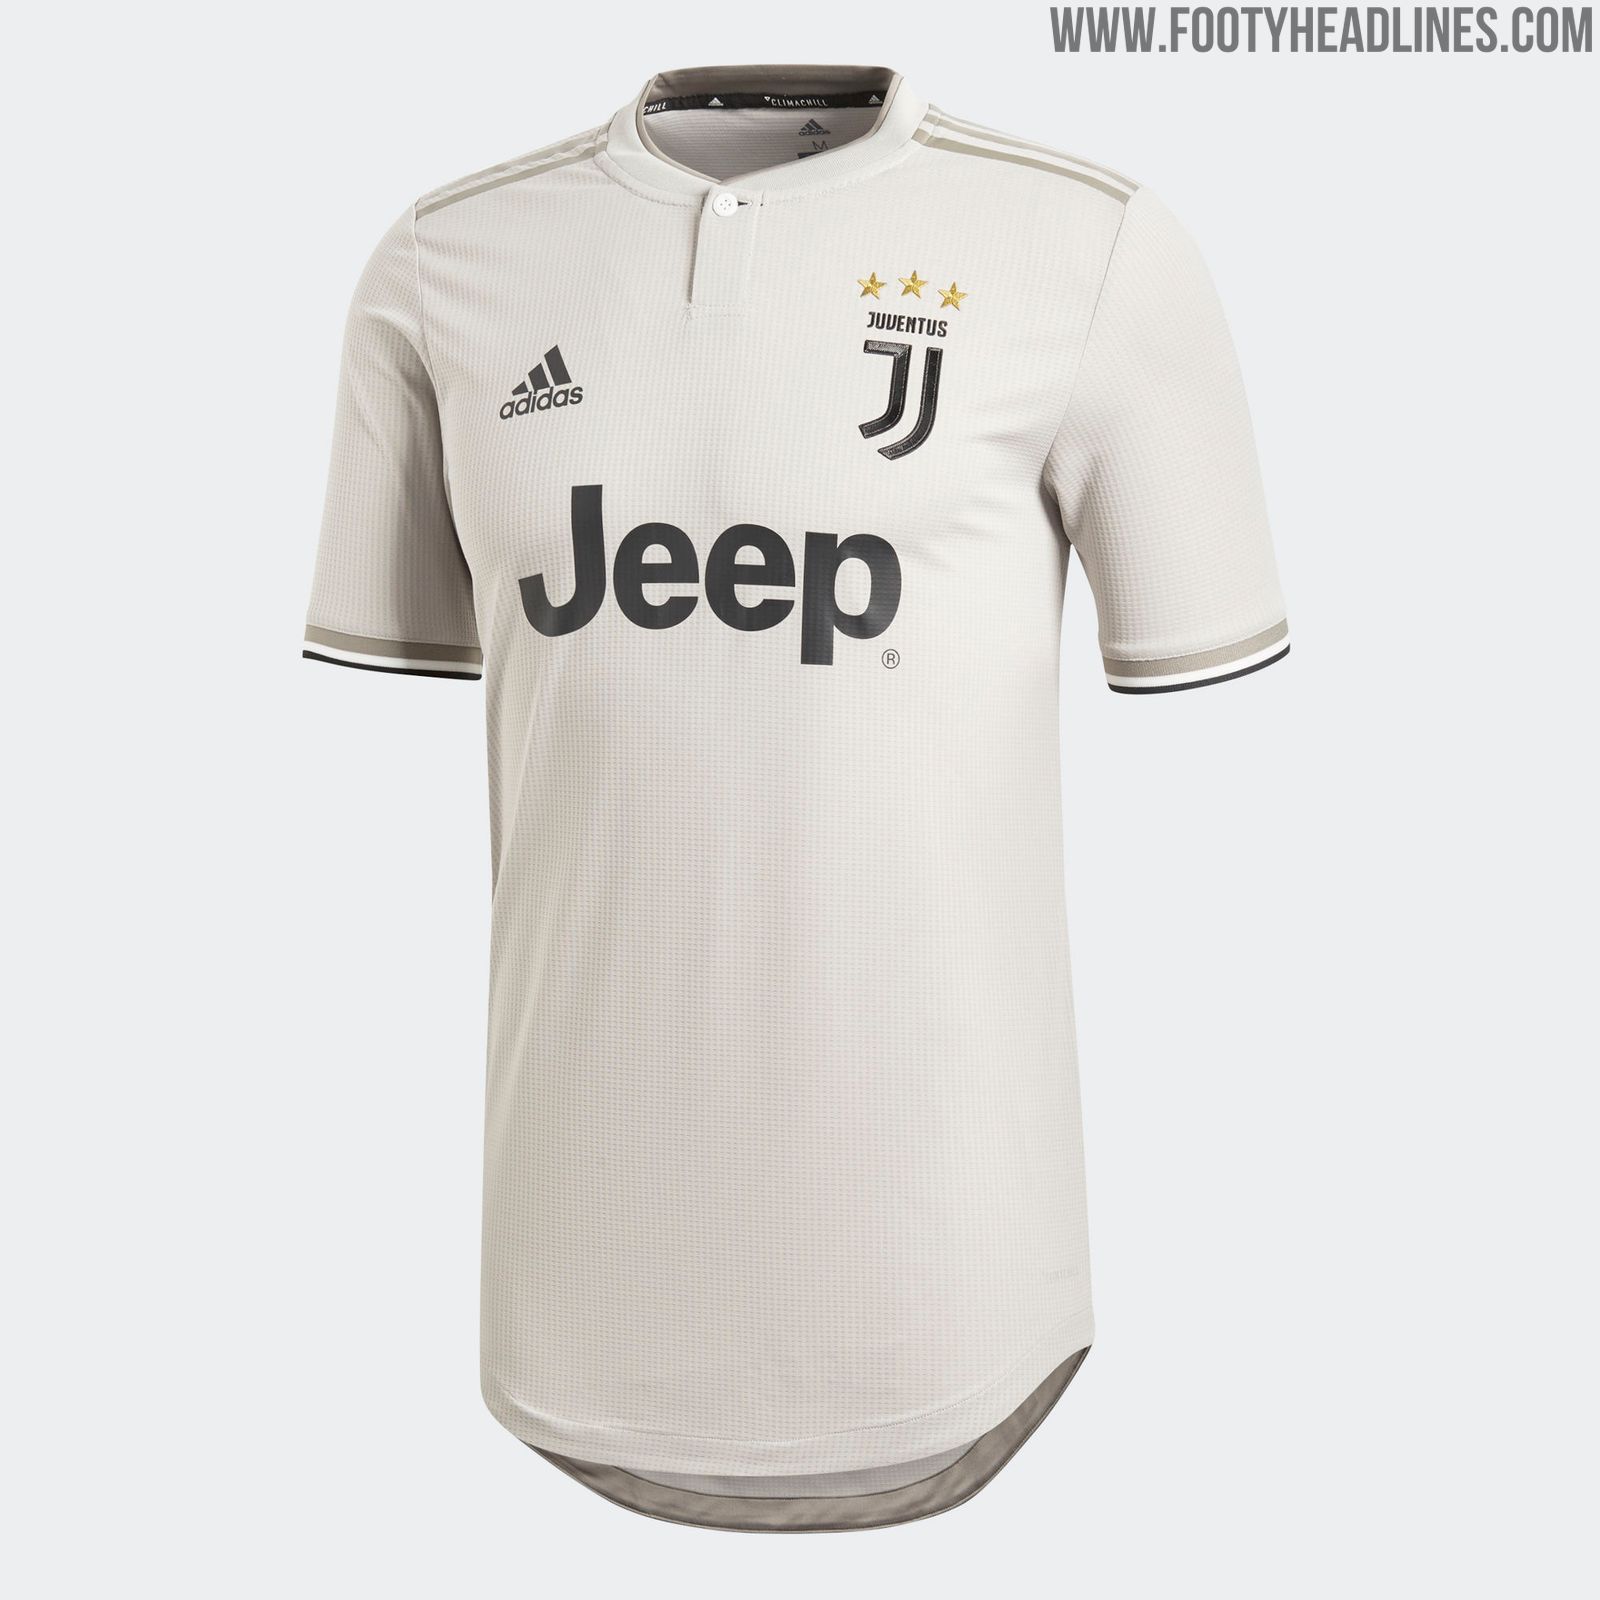 Juventus Away Kit Released - Headlines